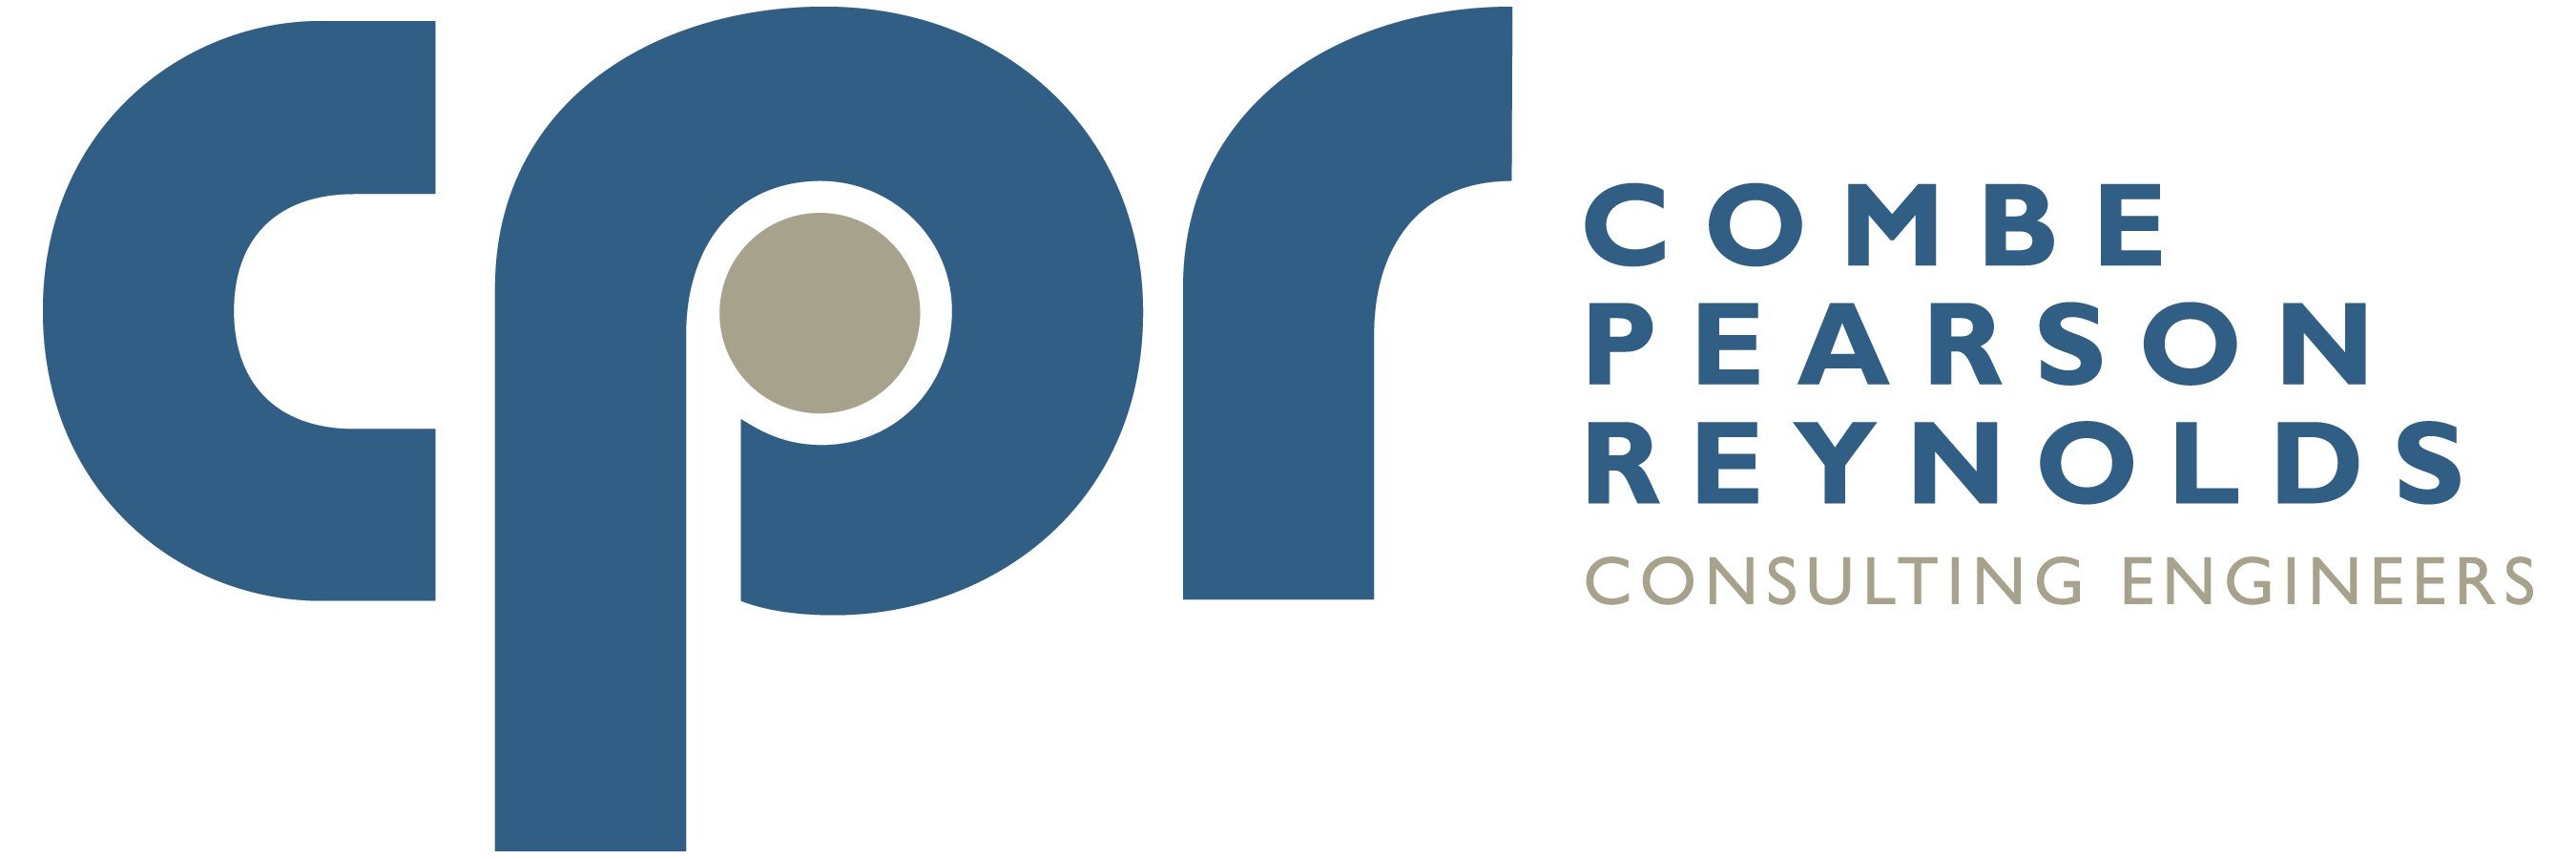 cpr engineers logo-1